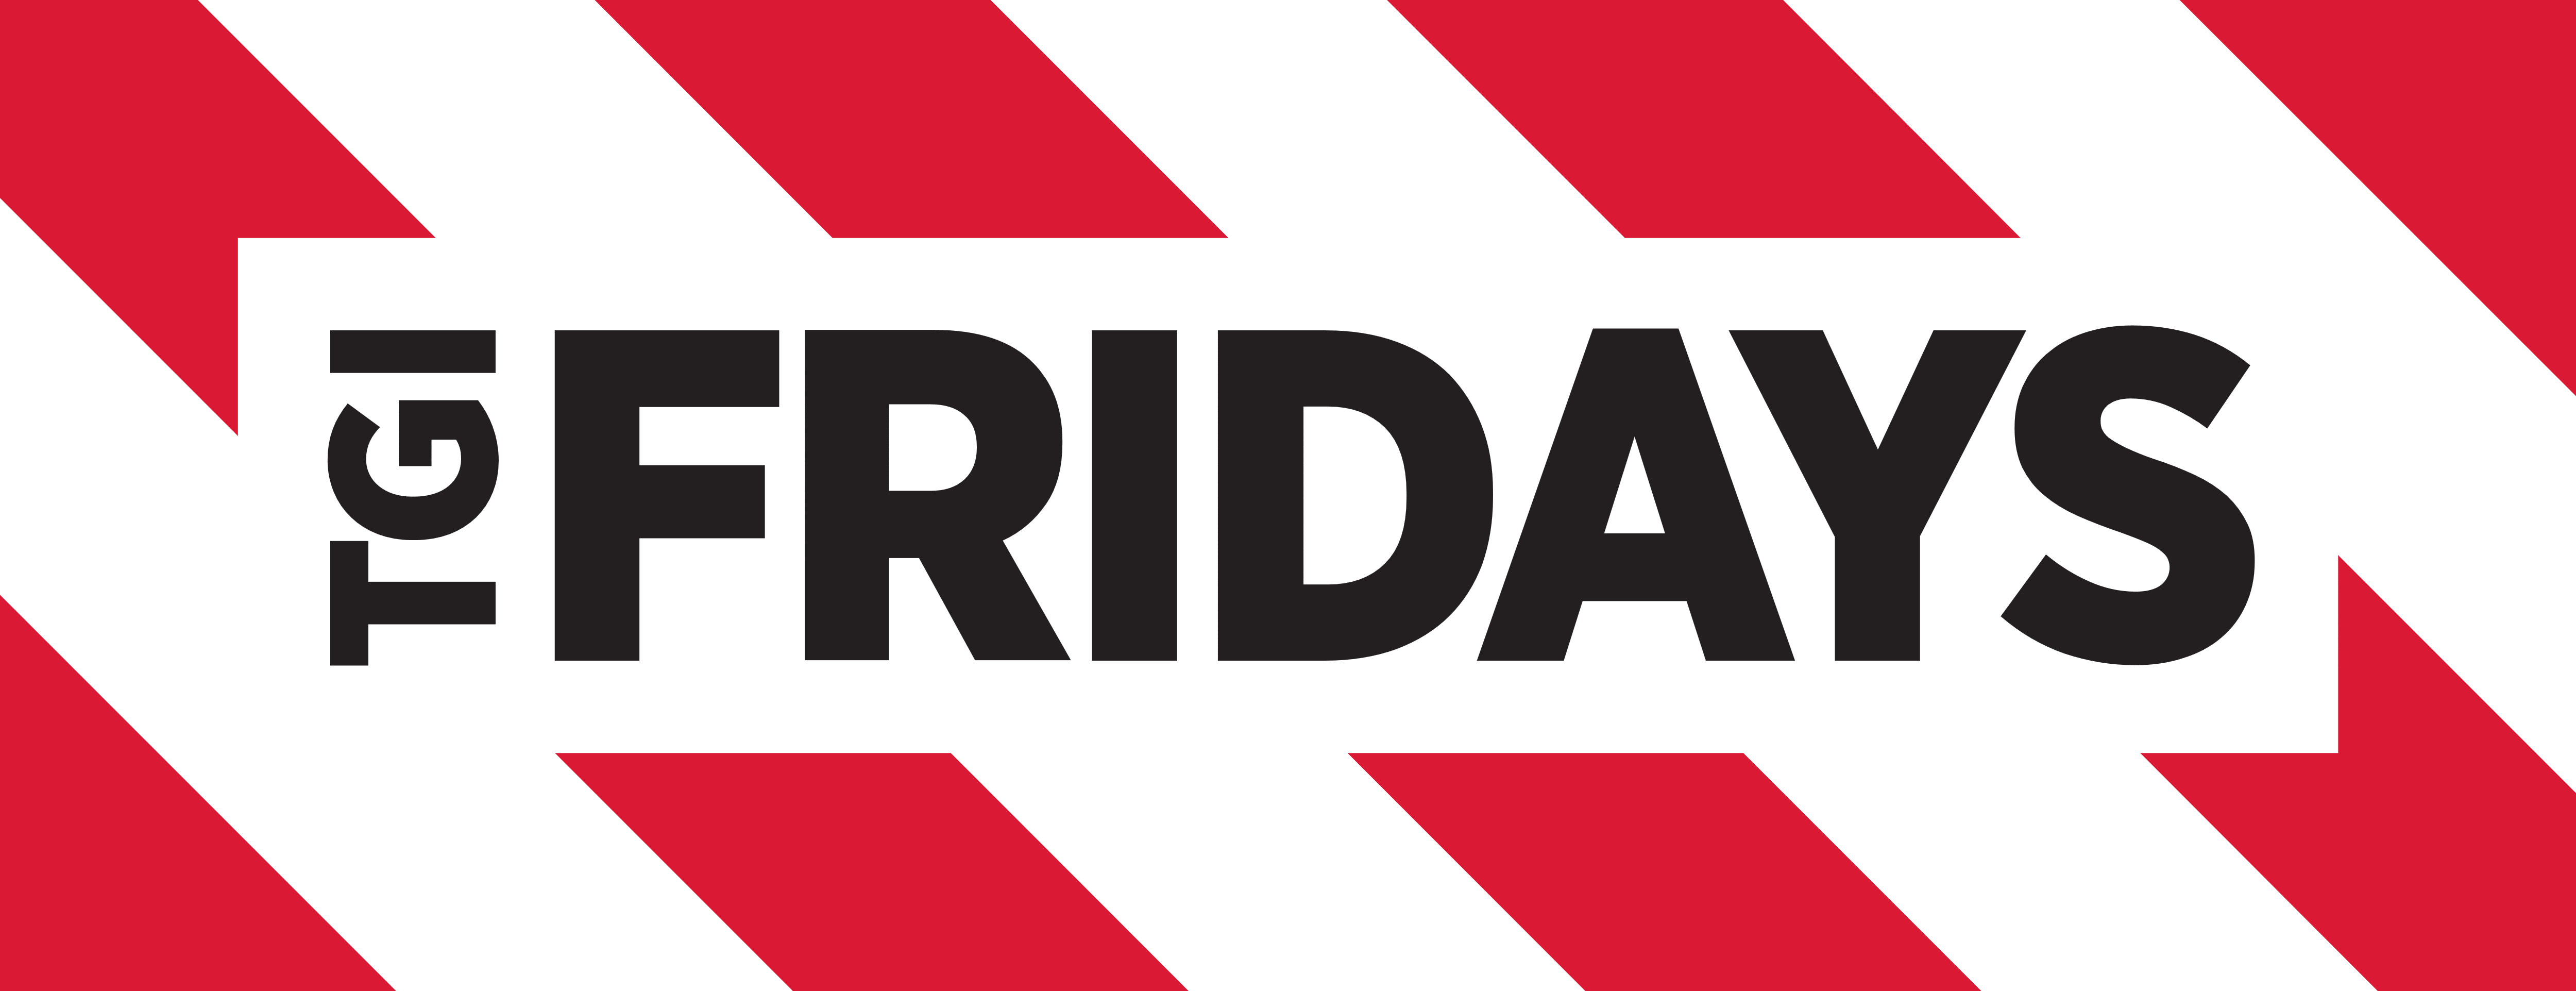 Fridays – Logos Download